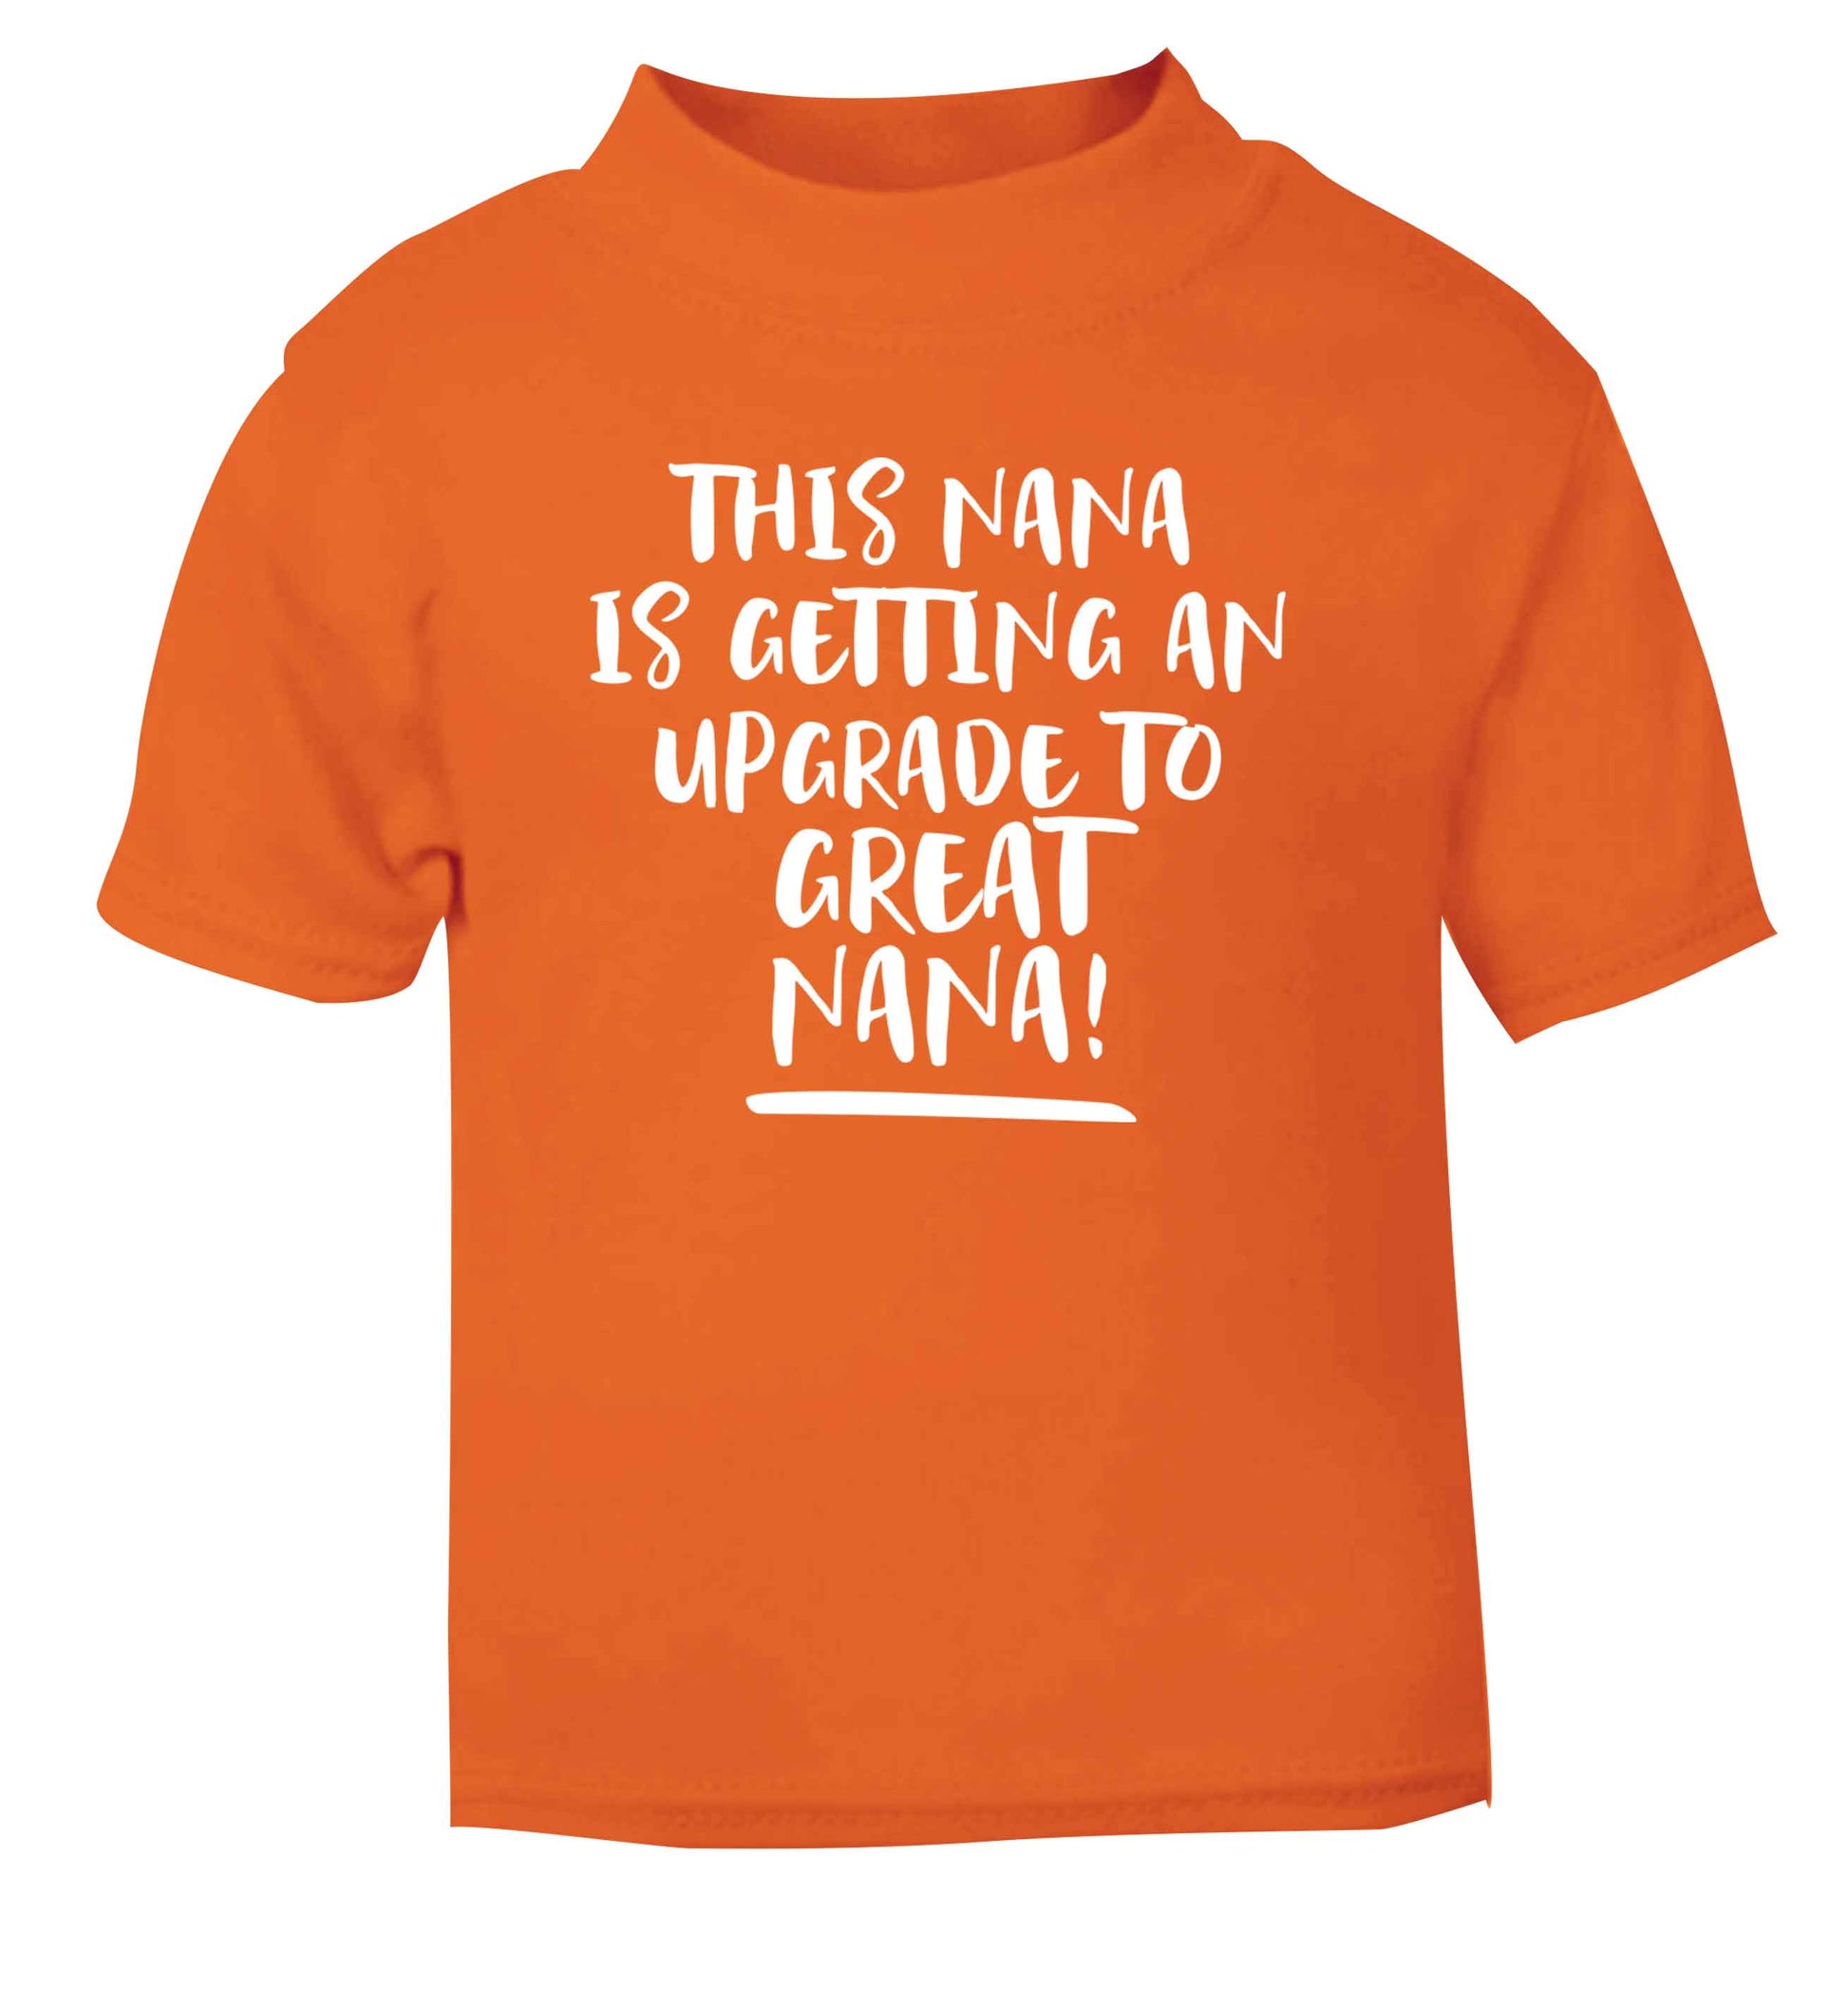 This nana is getting an upgrade to great nana! orange Baby Toddler Tshirt 2 Years